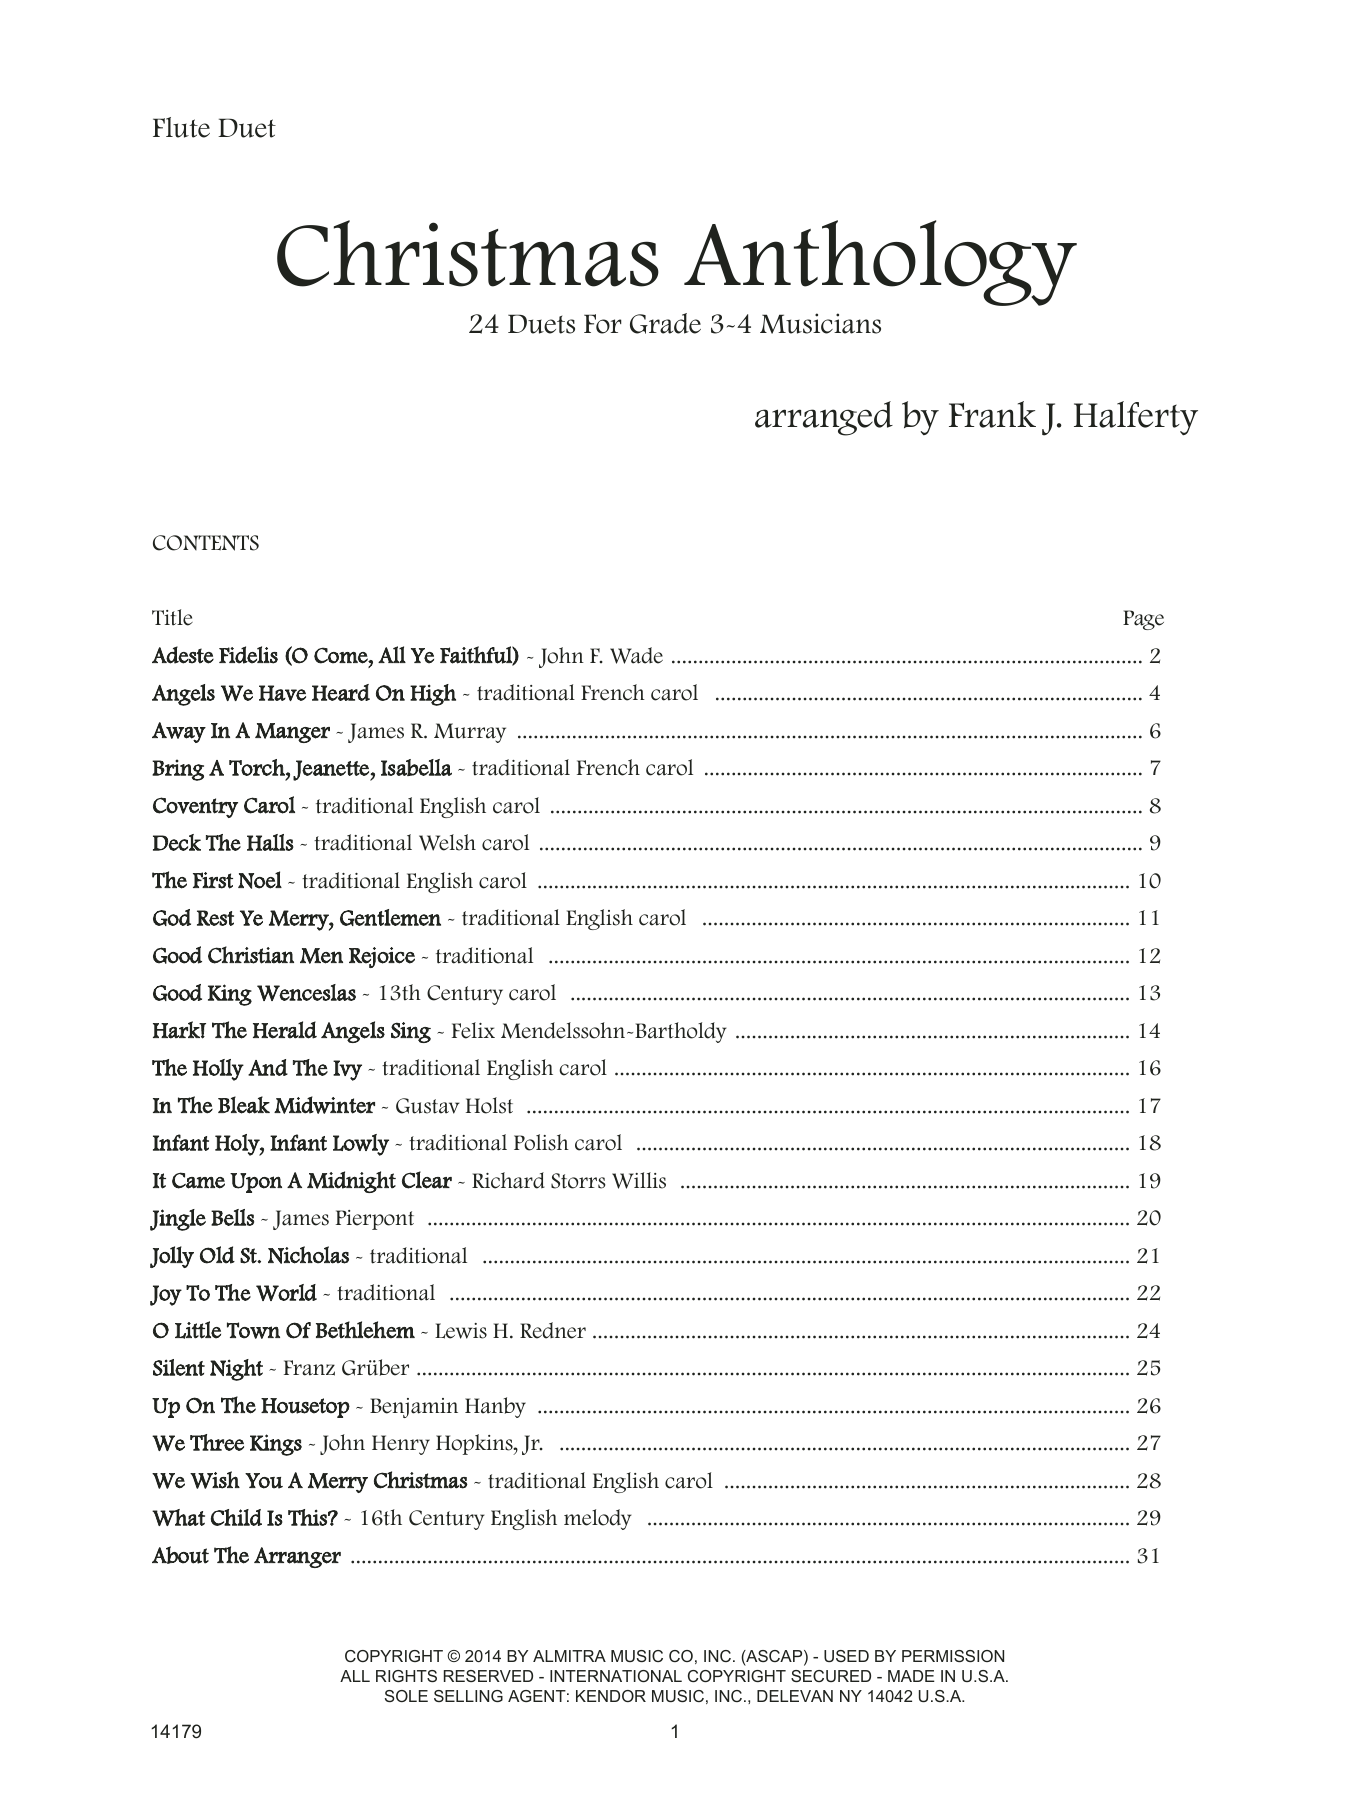 Download Frank J. Halferty Christmas Anthology (24 Duets For Grade Sheet Music